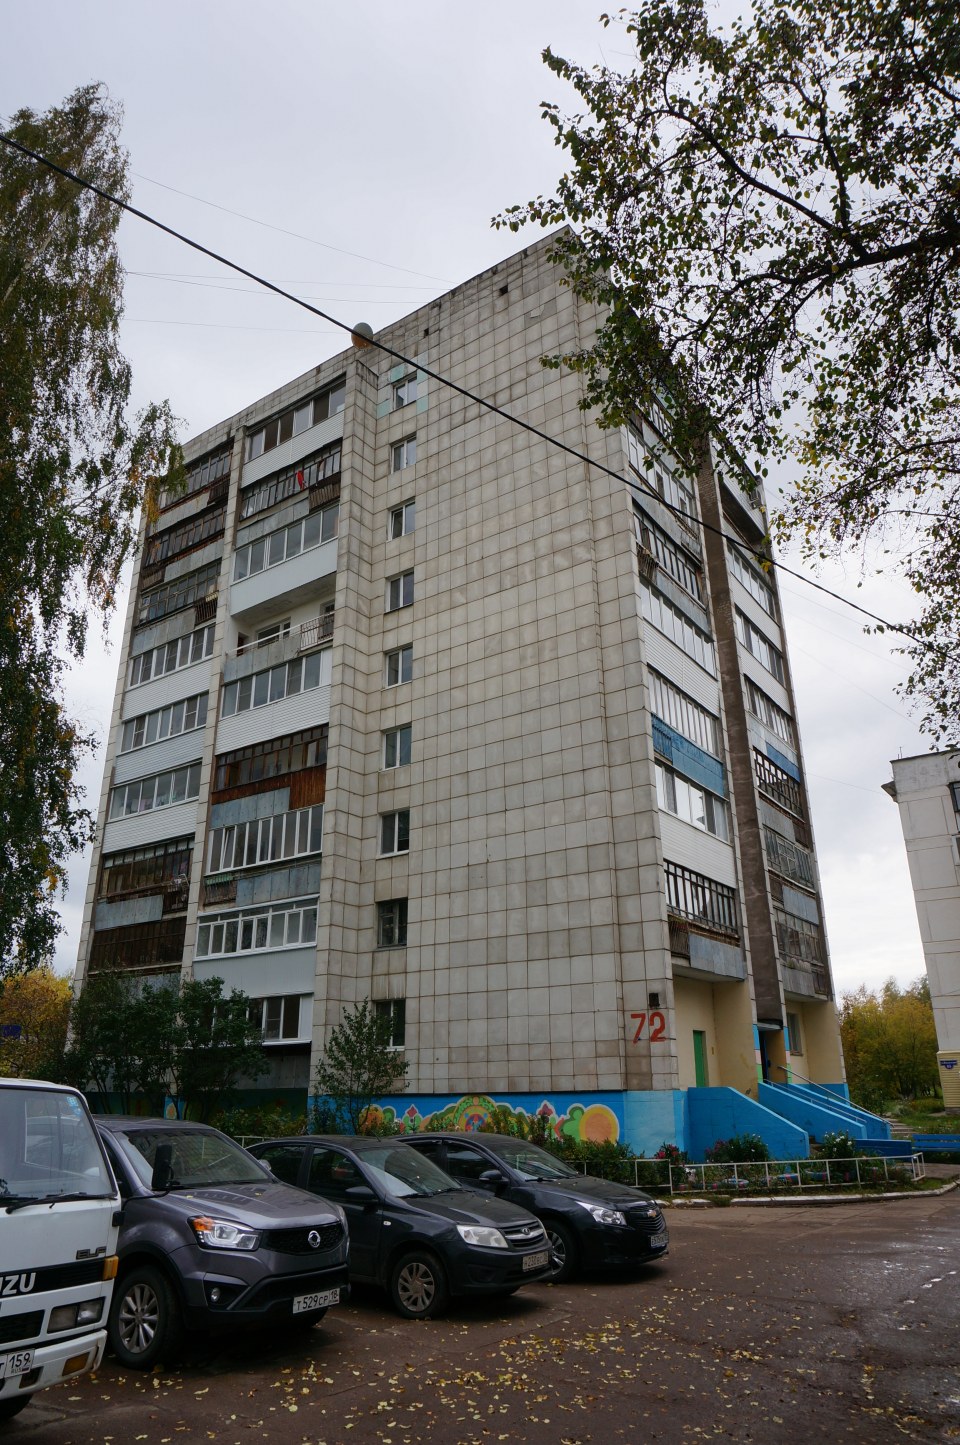 Chaykovsky, Улица Ленина, 72